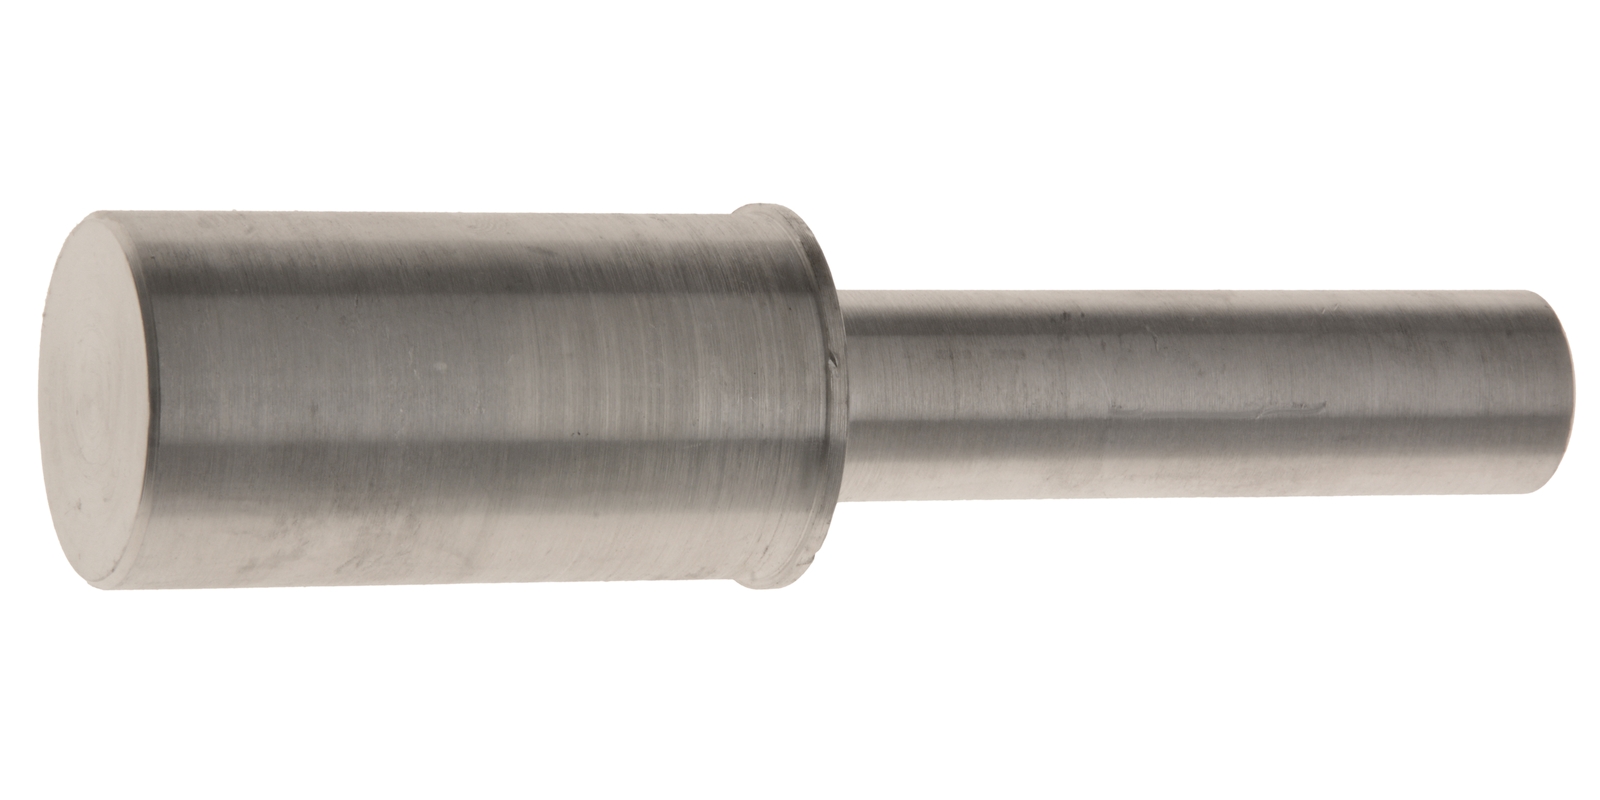 Obrázek produktu trn pro M002-85 průměr 42,5 mm DUCATI/MV AGUSTA JL-M05017 PIN 42,5